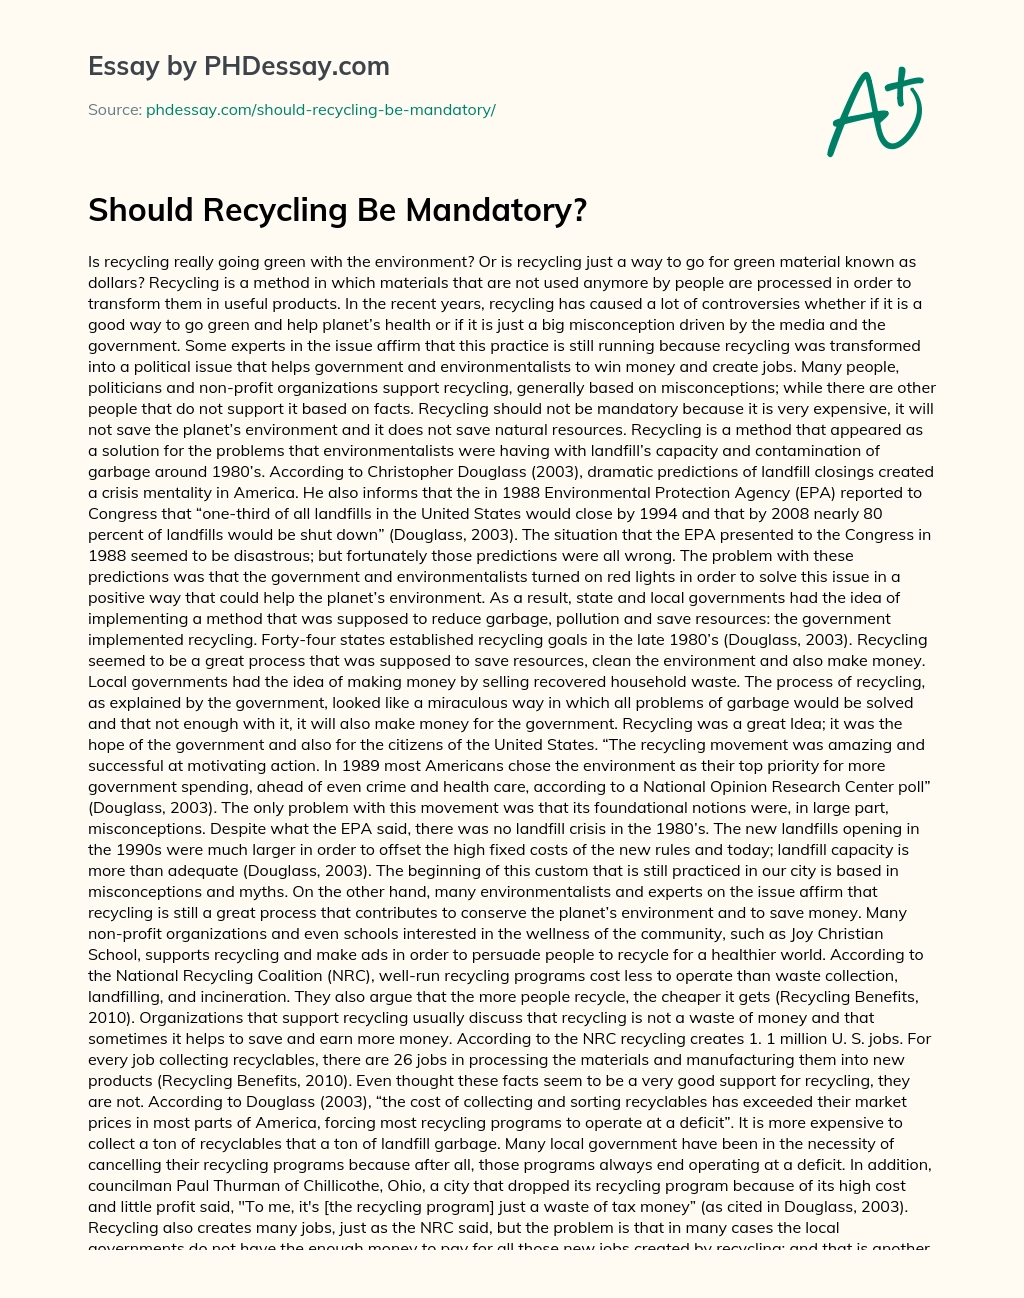 Should Recycling Be Mandatory? essay